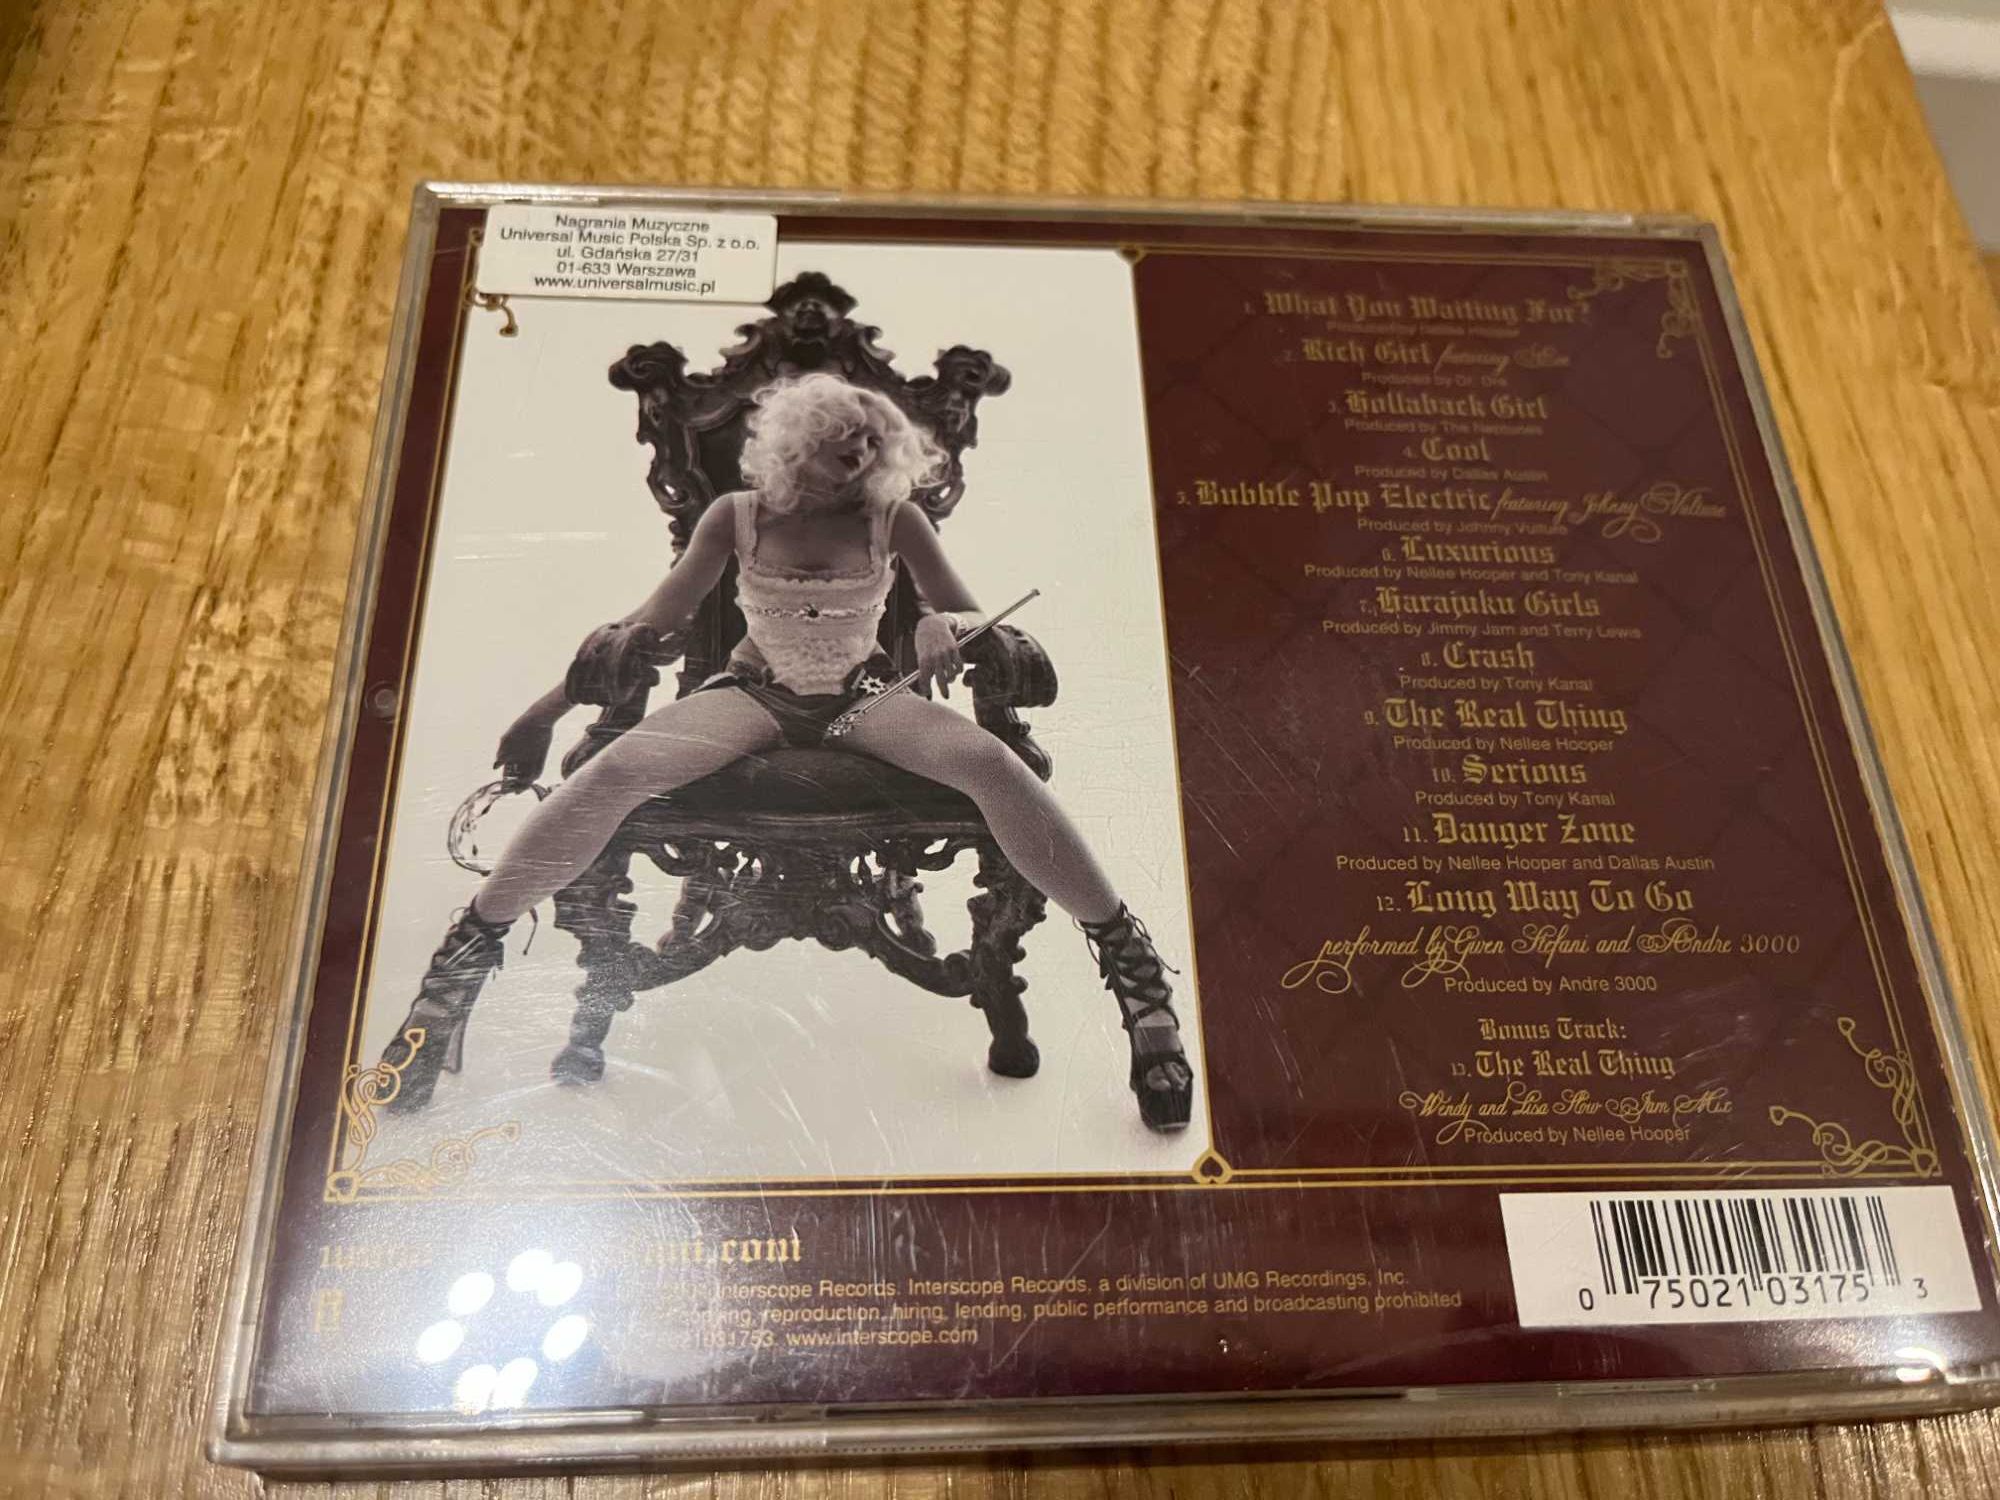 Gwen Stefani Love Angel Music Baby CD